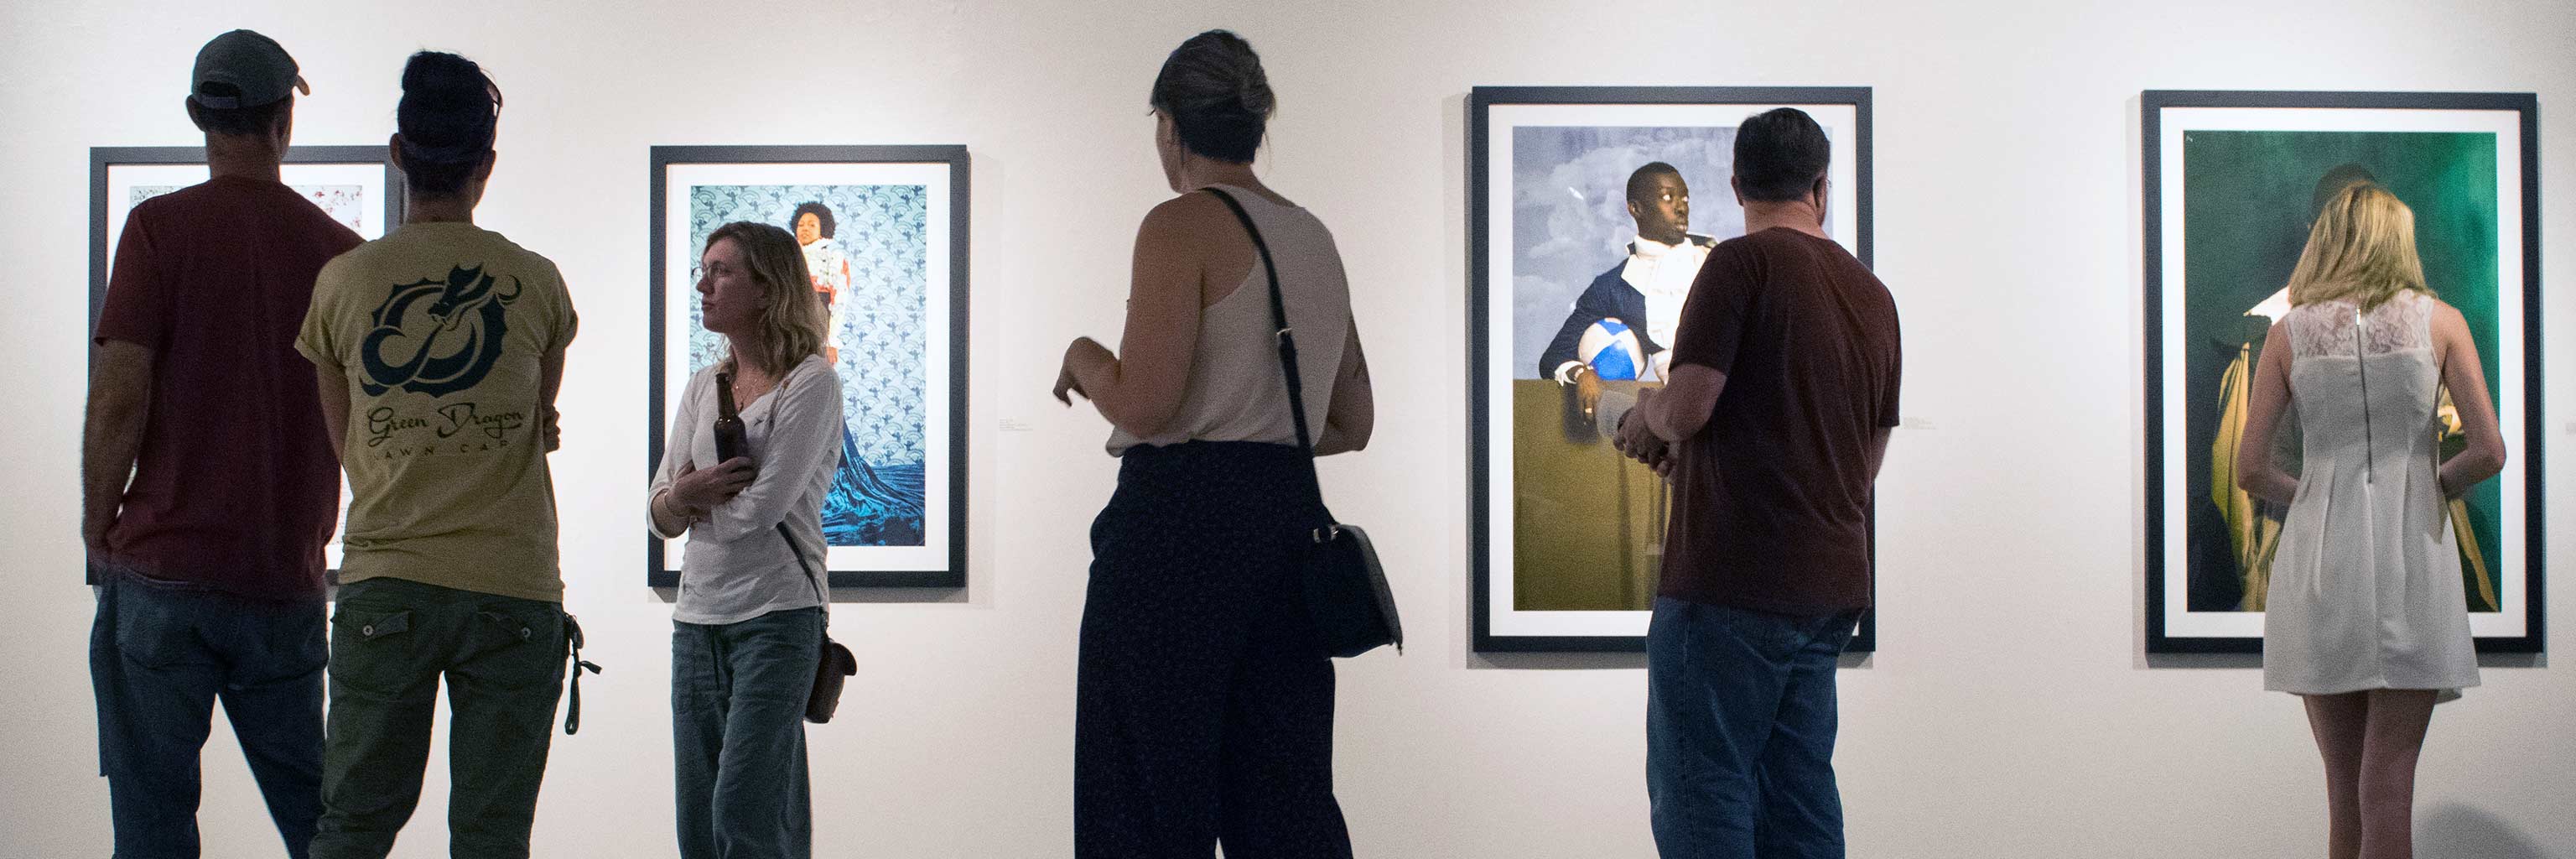 people looking at paintings in an art gallery